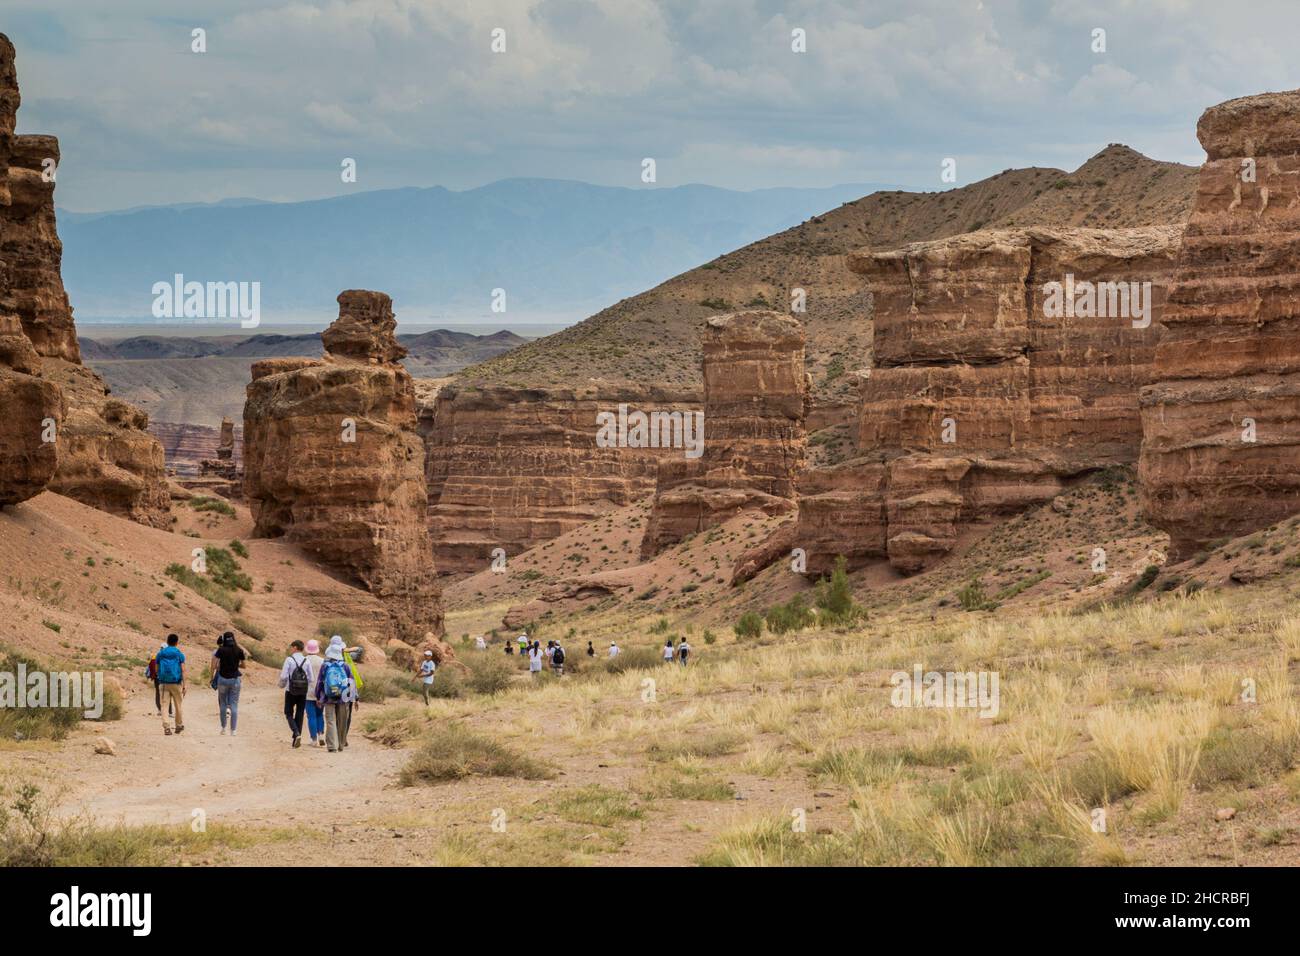 SHARYN, KAZAKHSTAN - 28 LUGLIO 2018: I turisti visitano il canyon di Sharyn in Kazakhstan Foto Stock